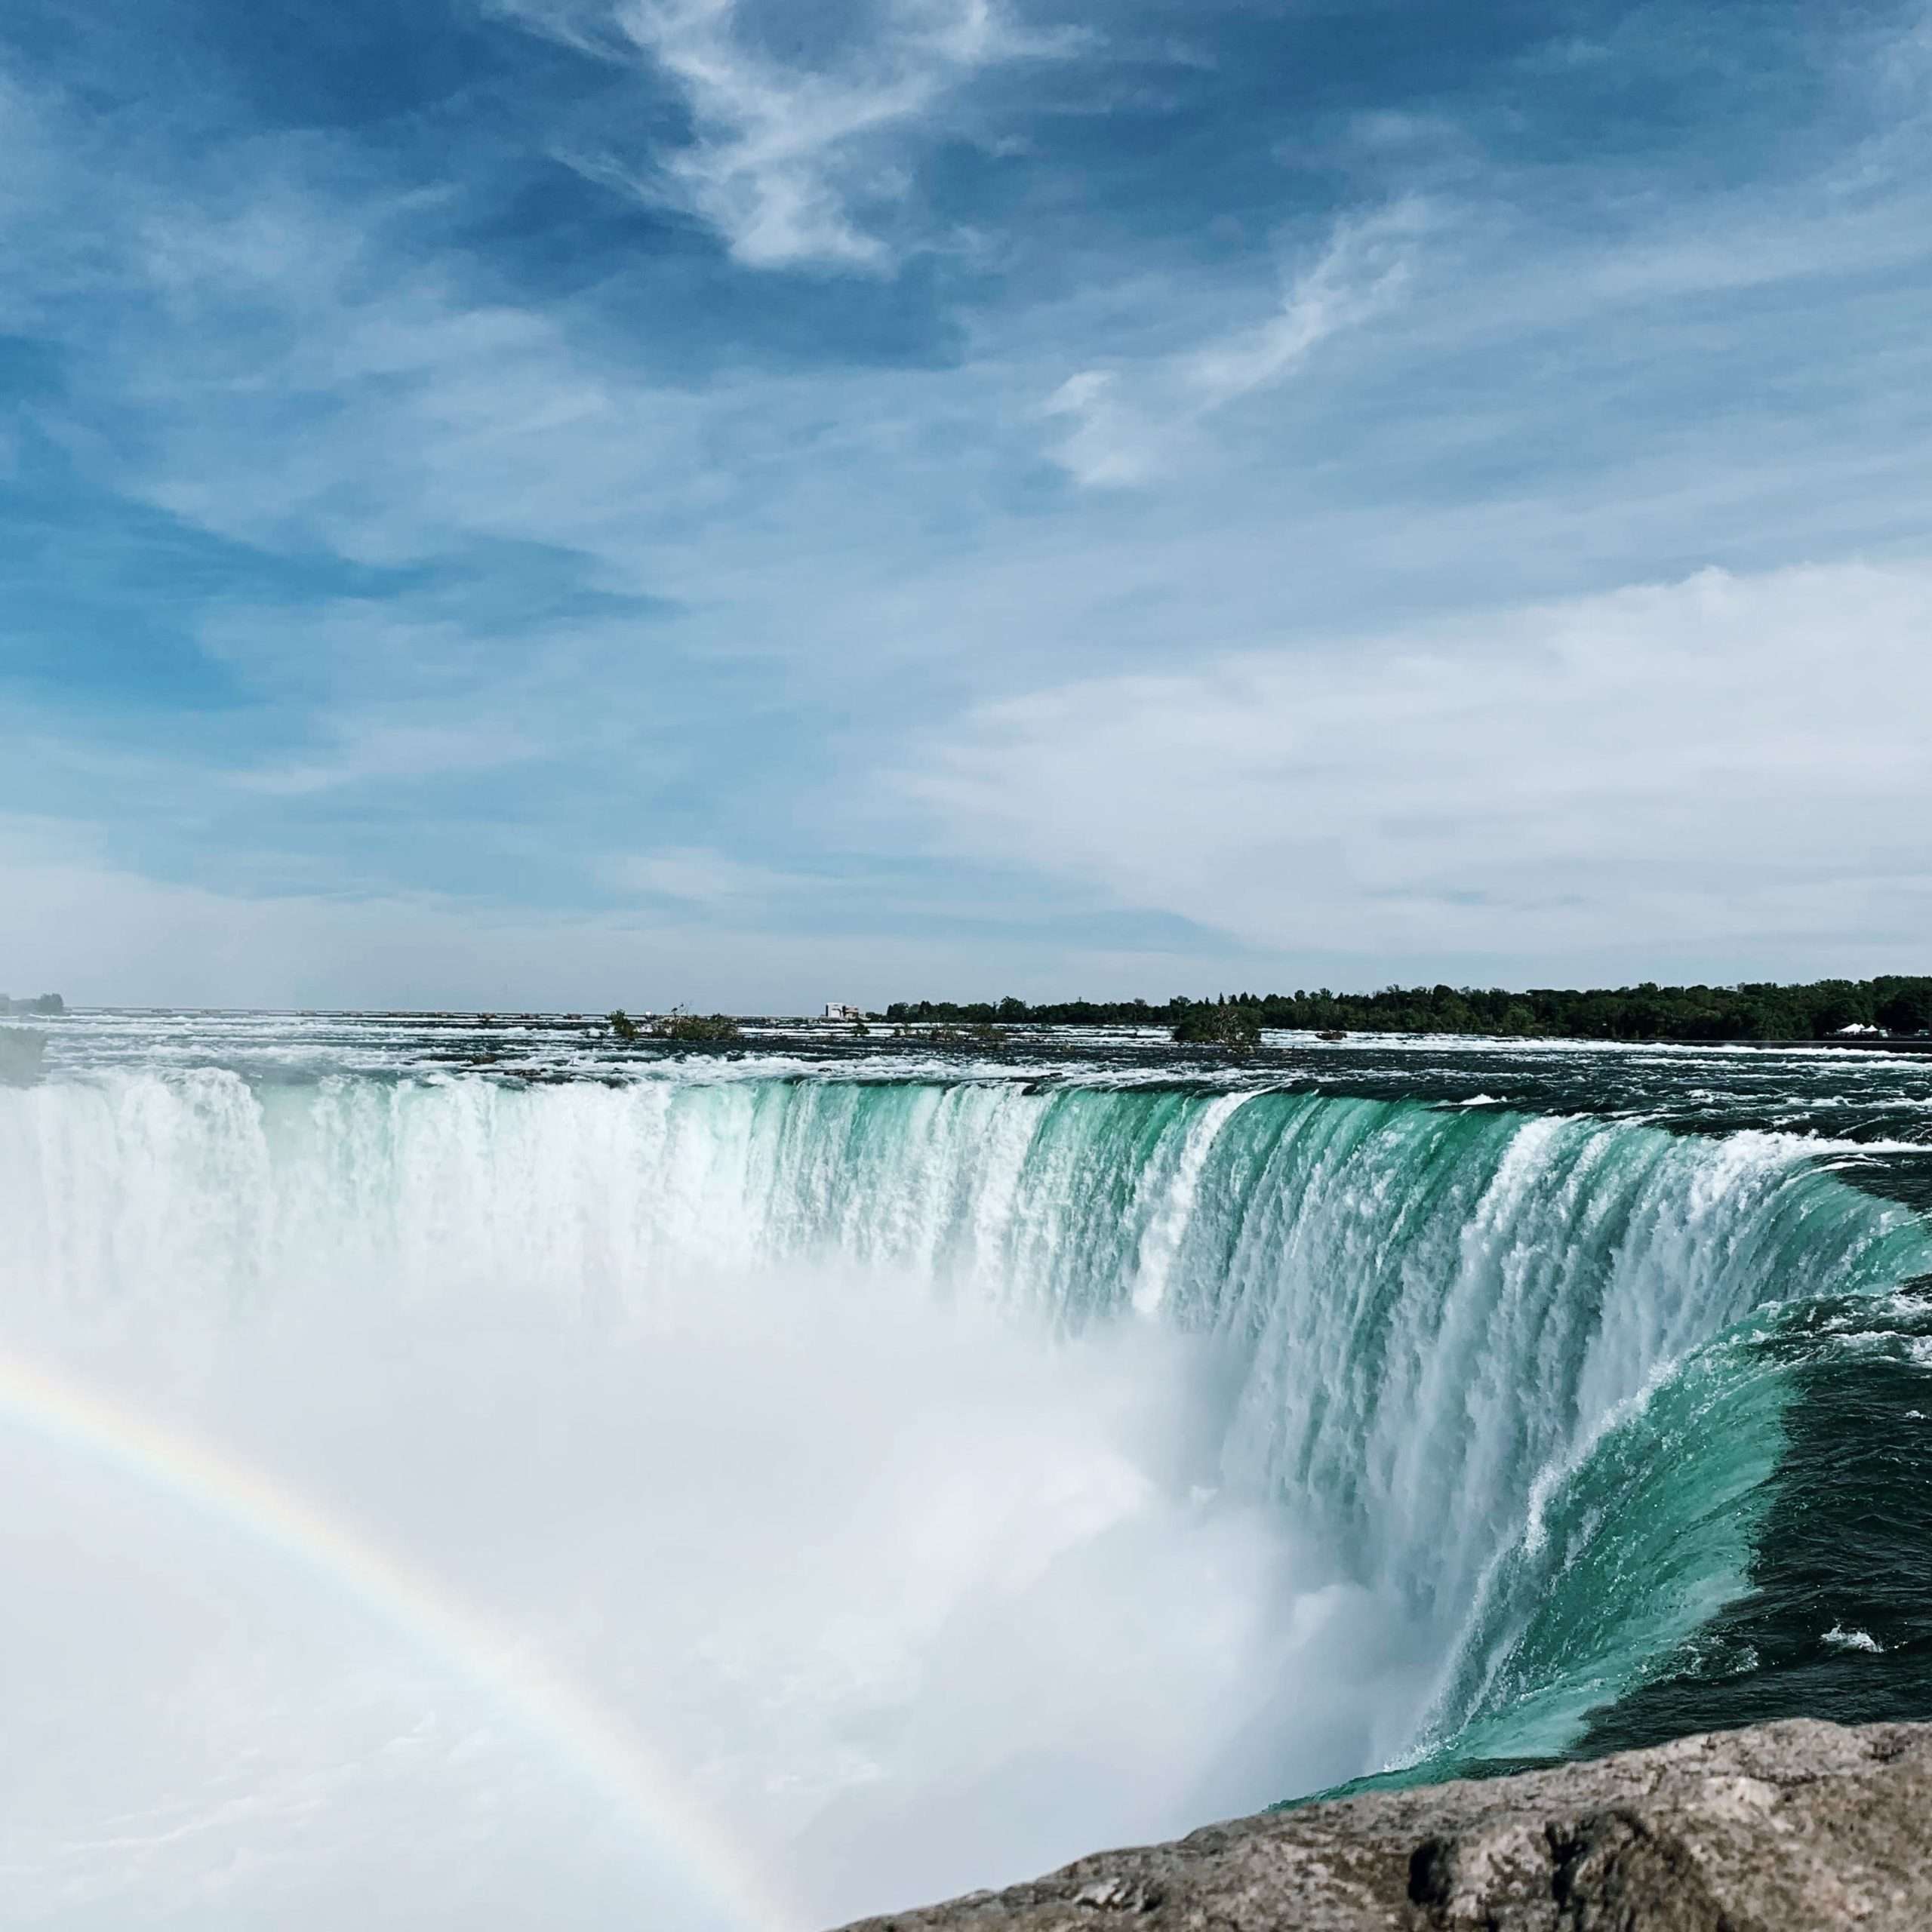 Day 02 - Niagara Falls/Toronto/Niagara Falls